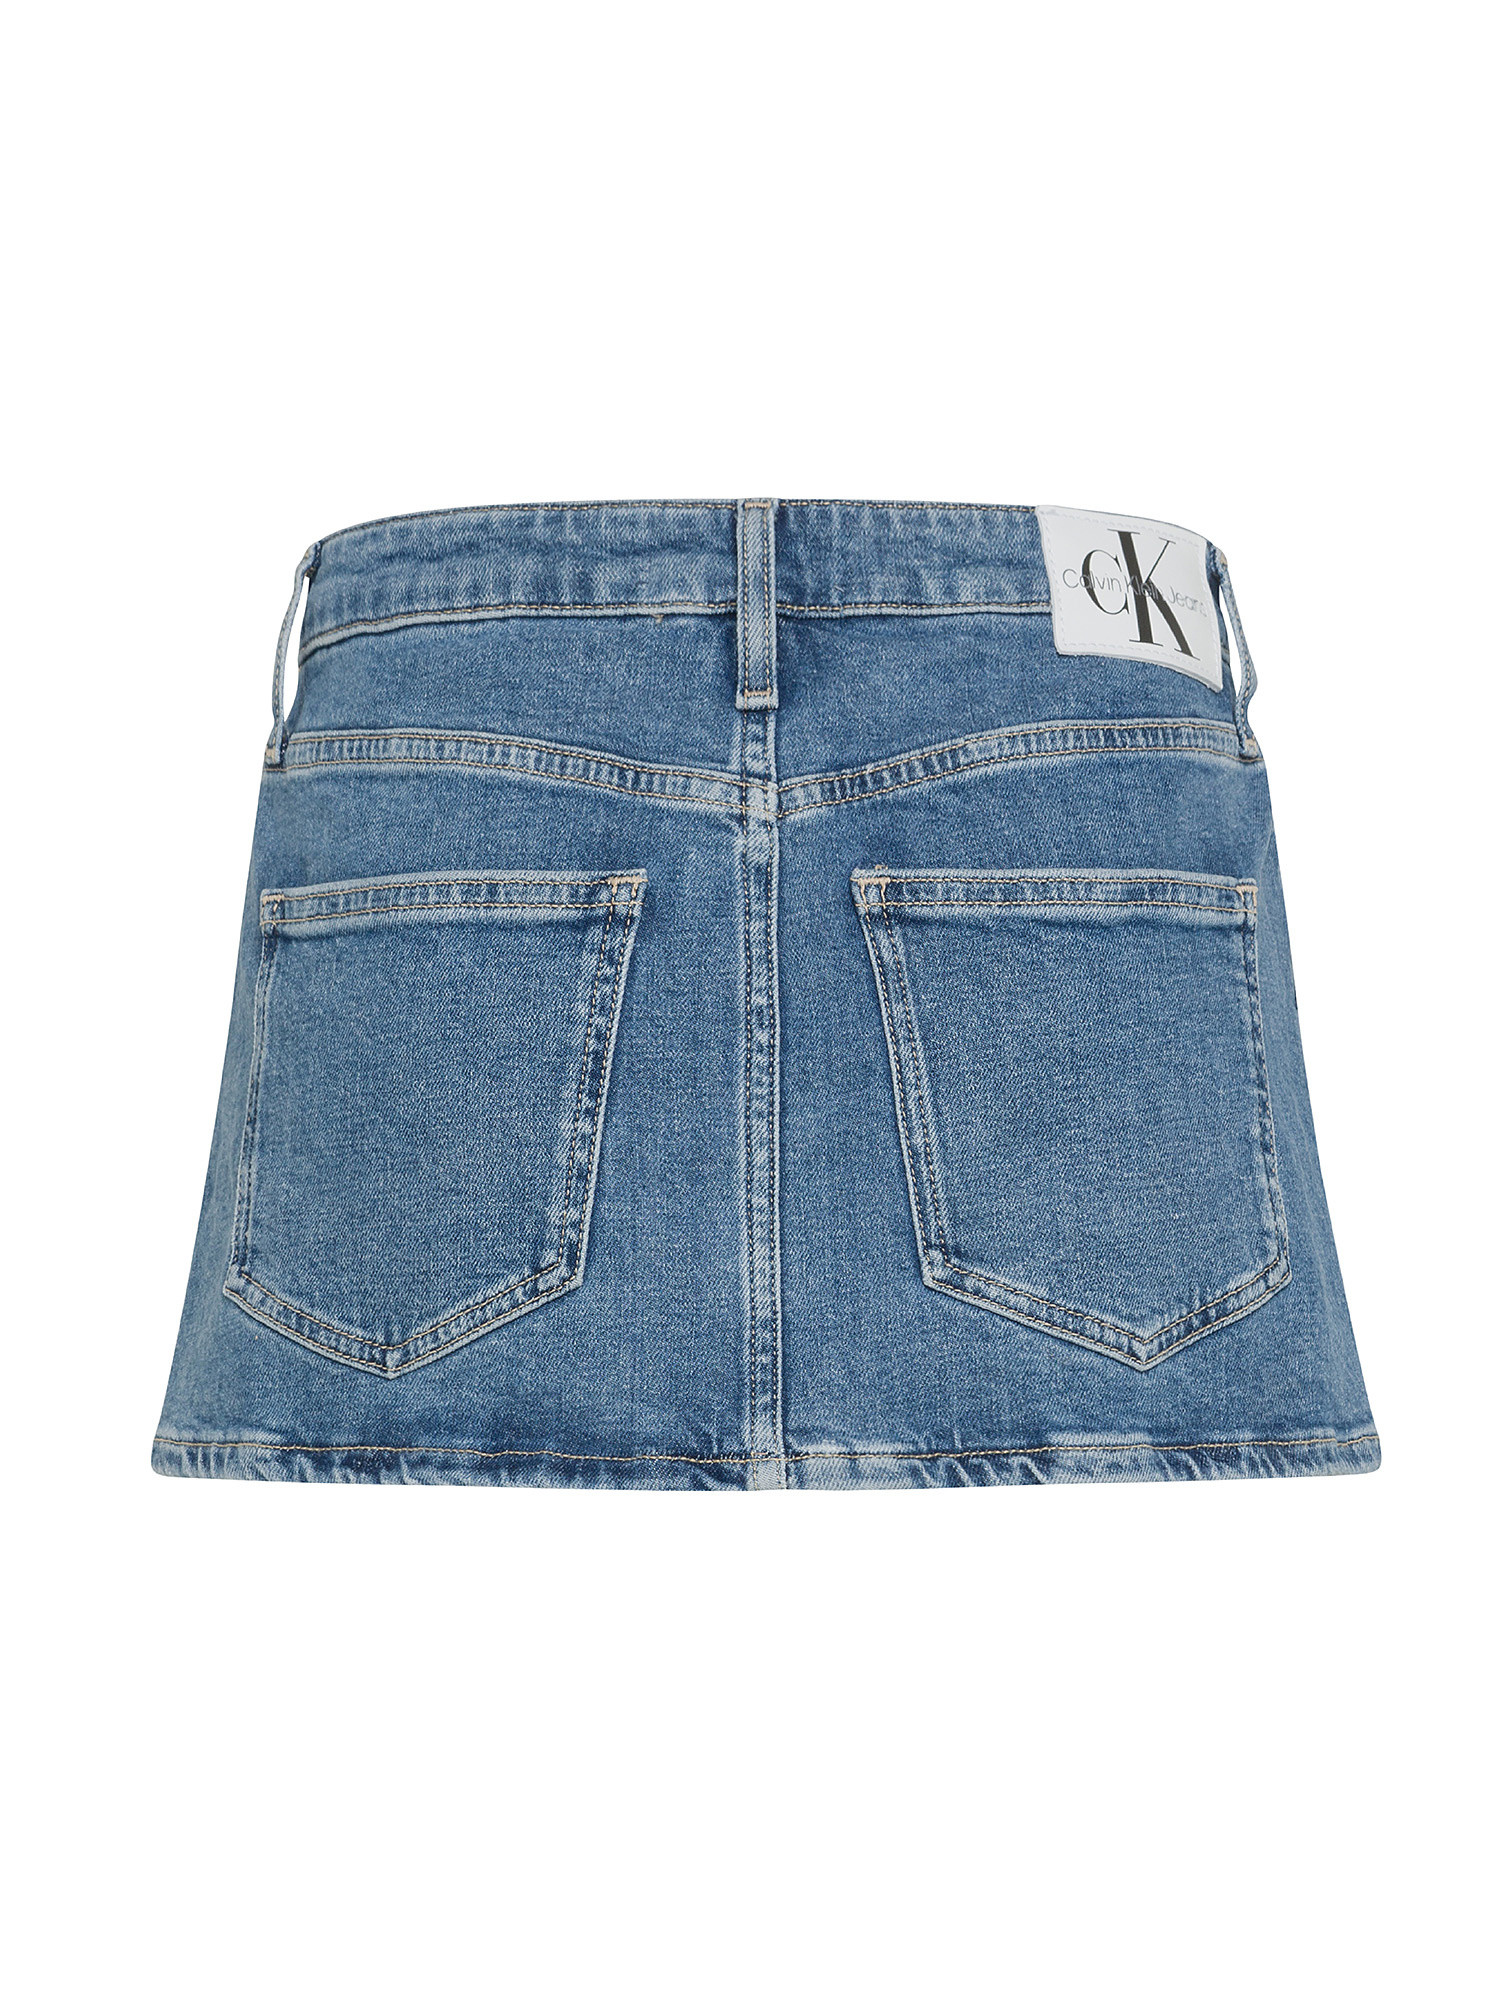 Calvin Klein Jeans - Minigonna in denim di cotone elasticizzato, Denim, large image number 1